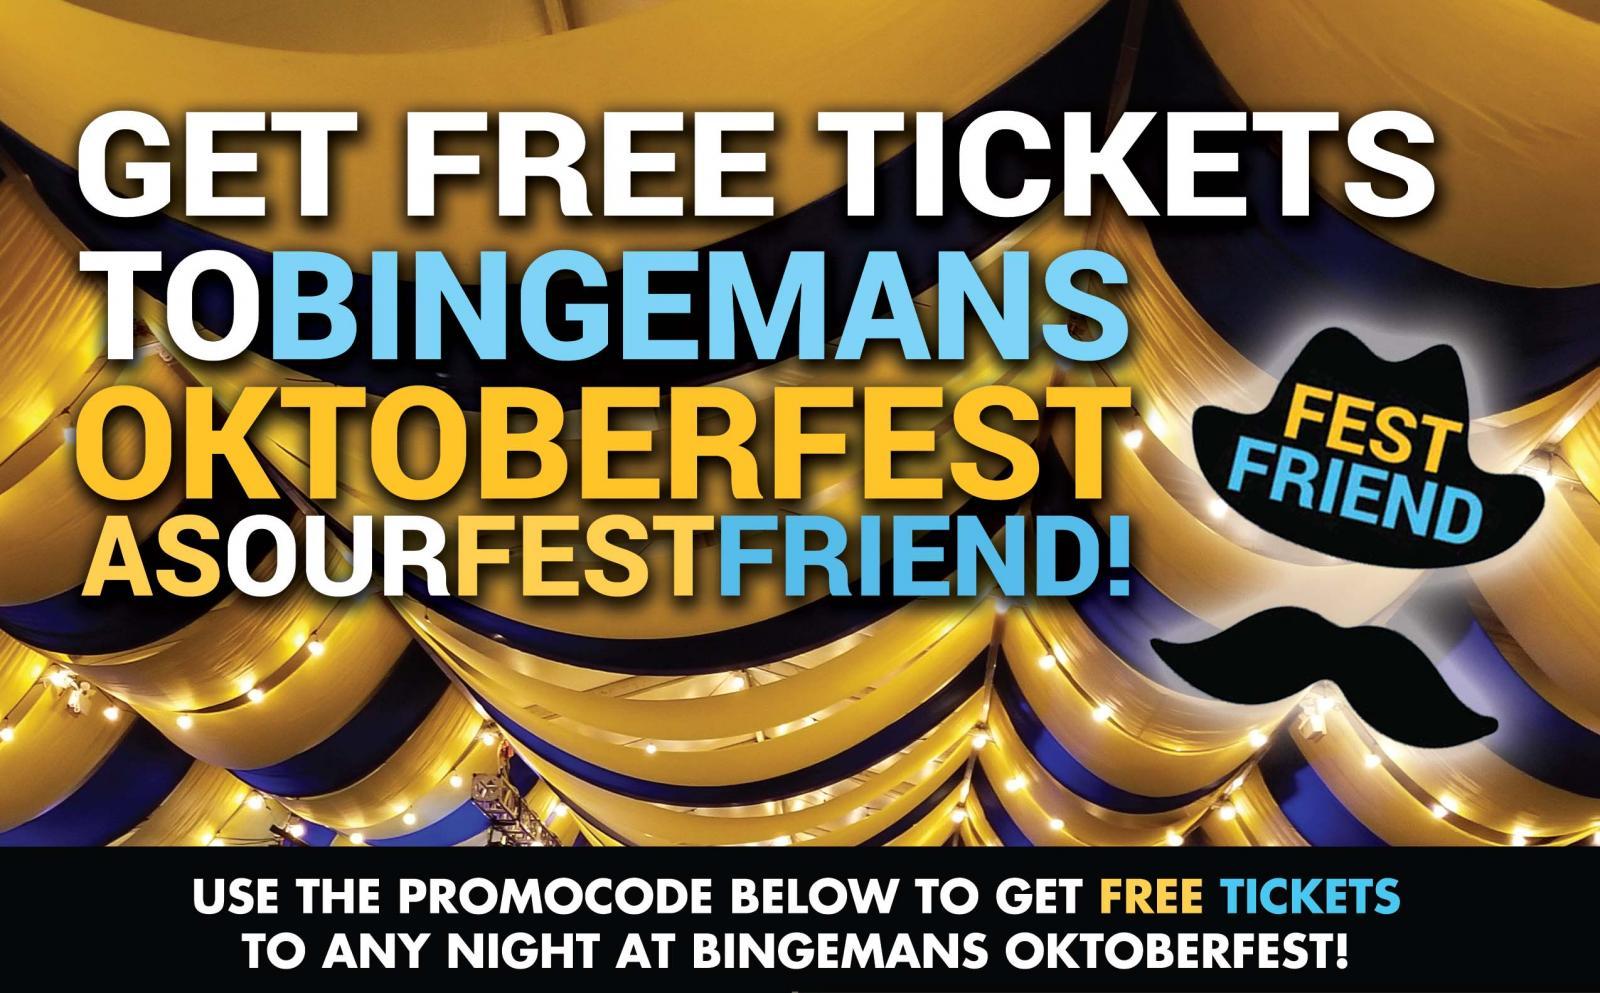 Get Free Tickets to Oktoberfest